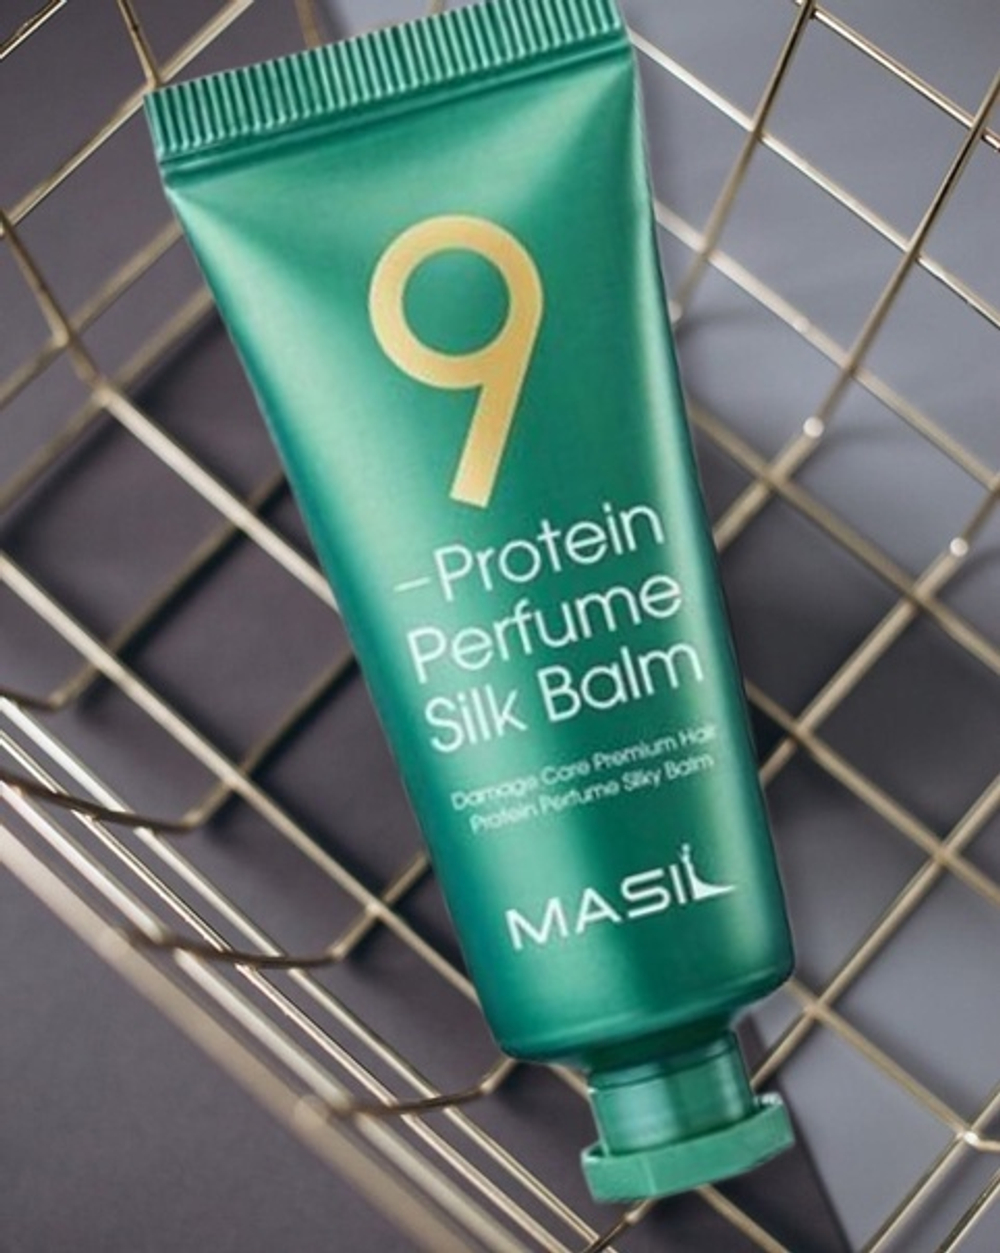 Masil 9 Protein Perfume Silk Balm несмываемый бальзам для поврежденных волос